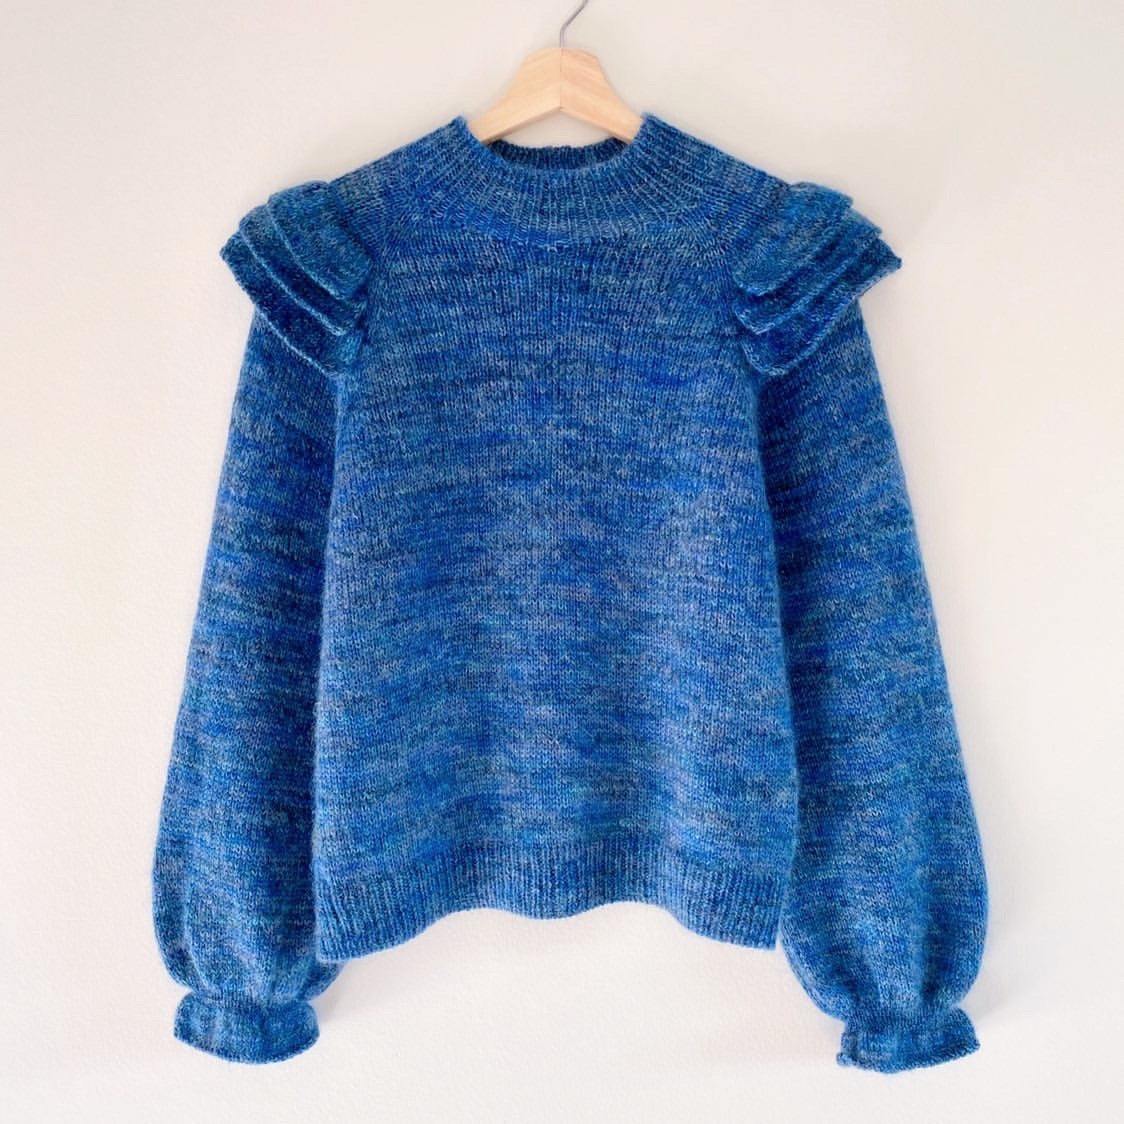 Rufflegalore Sweater - Adult (english)